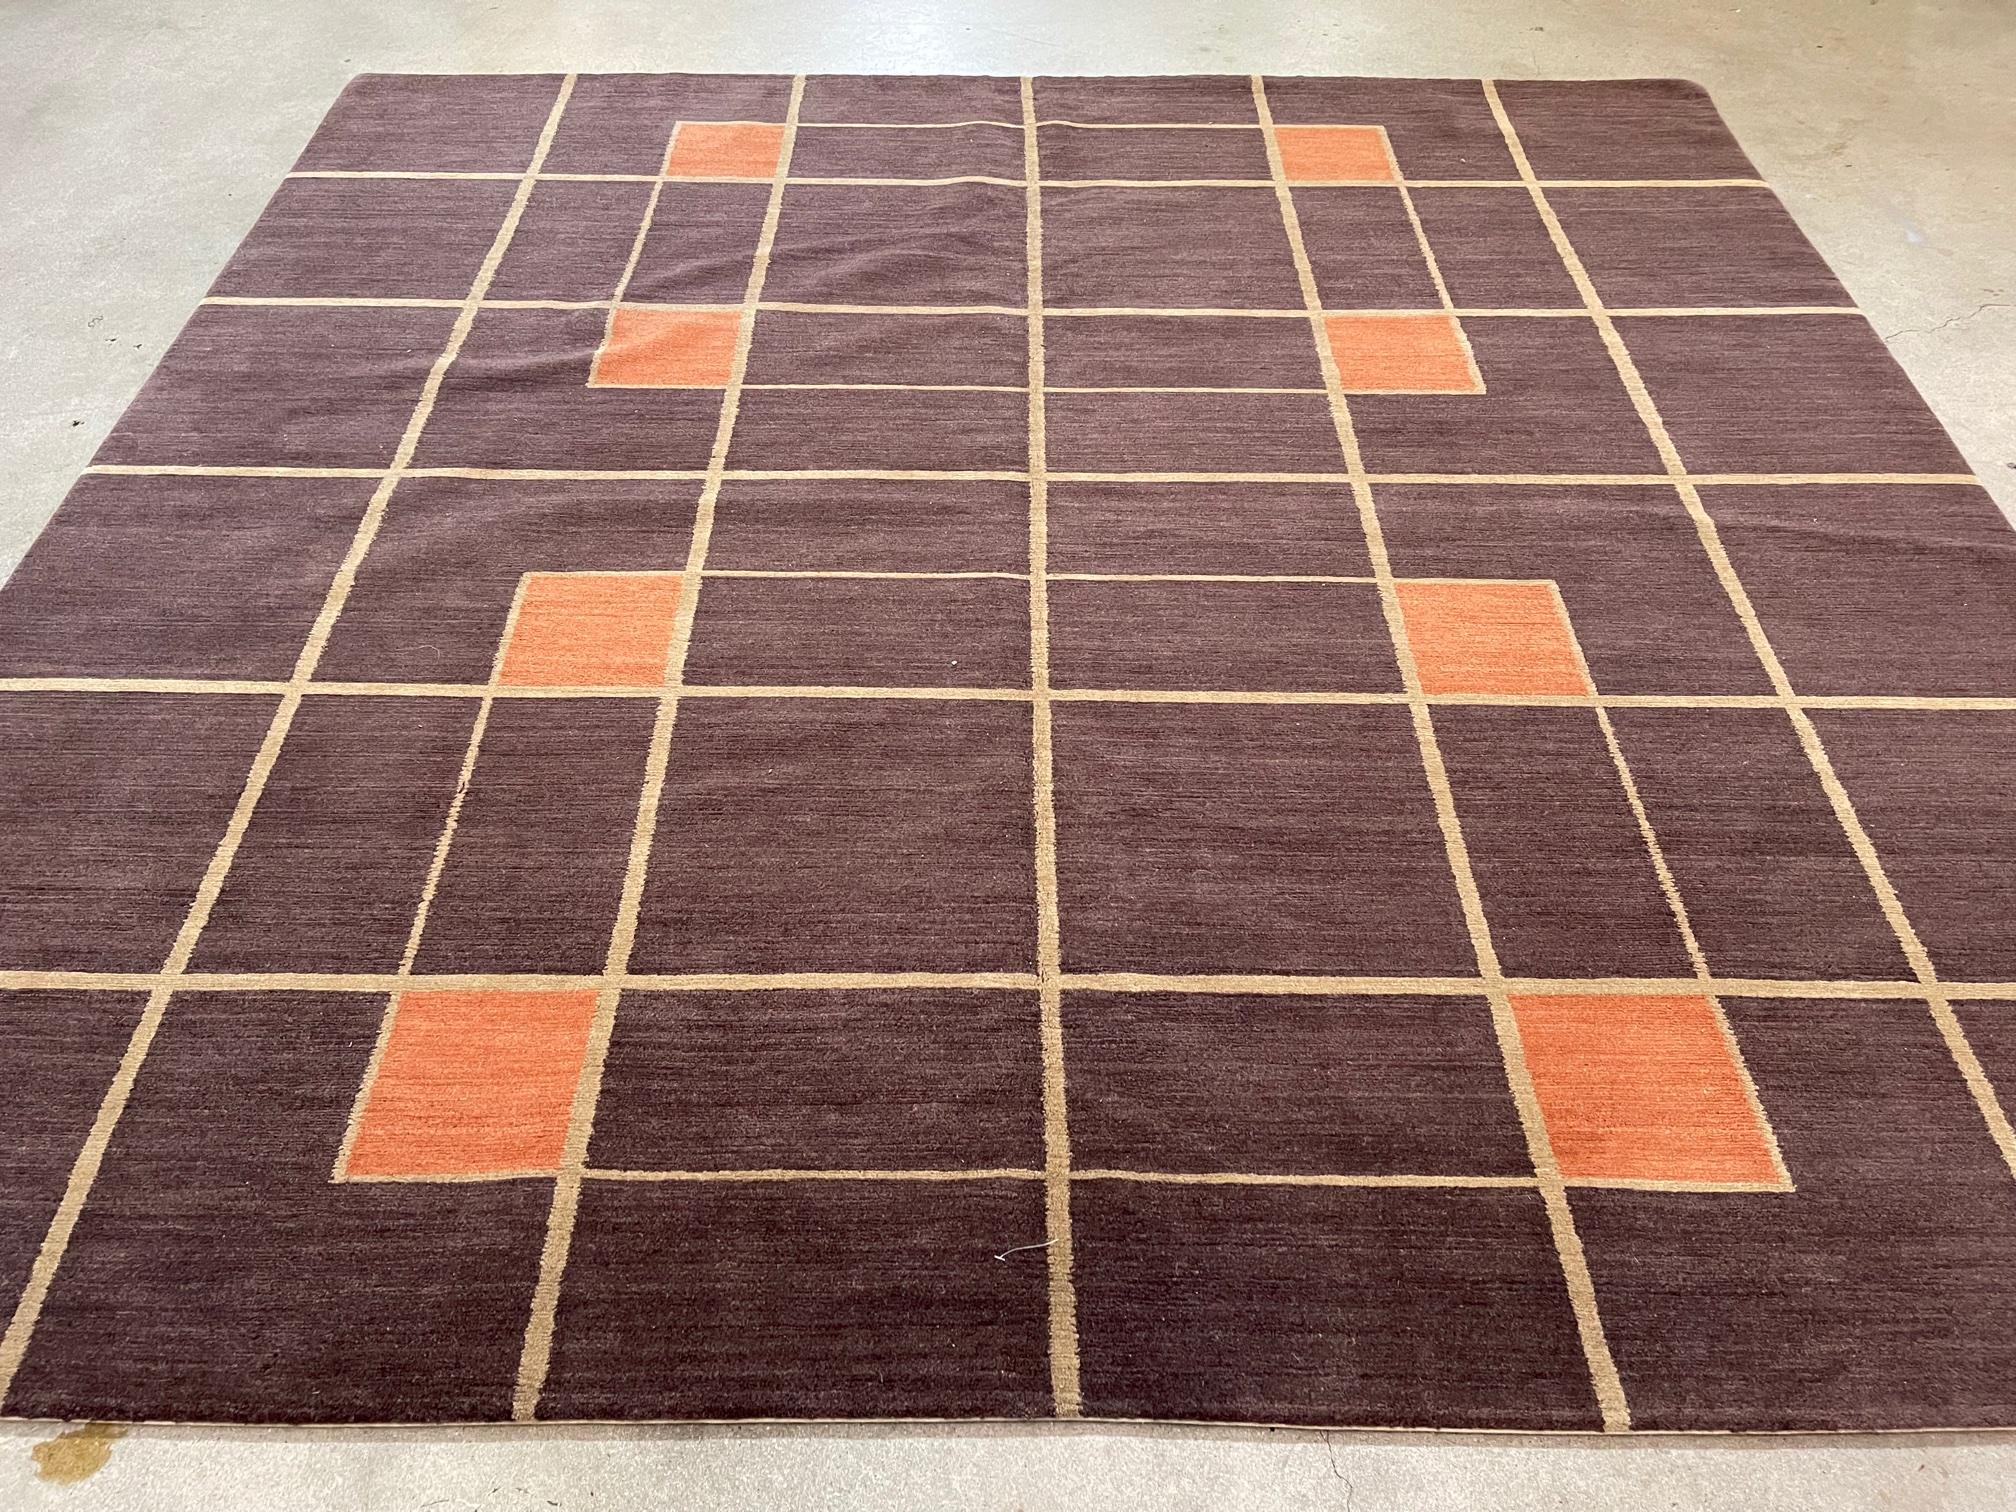 Geometric box pattern rug.

Colors: Teal, coral, dark brown.